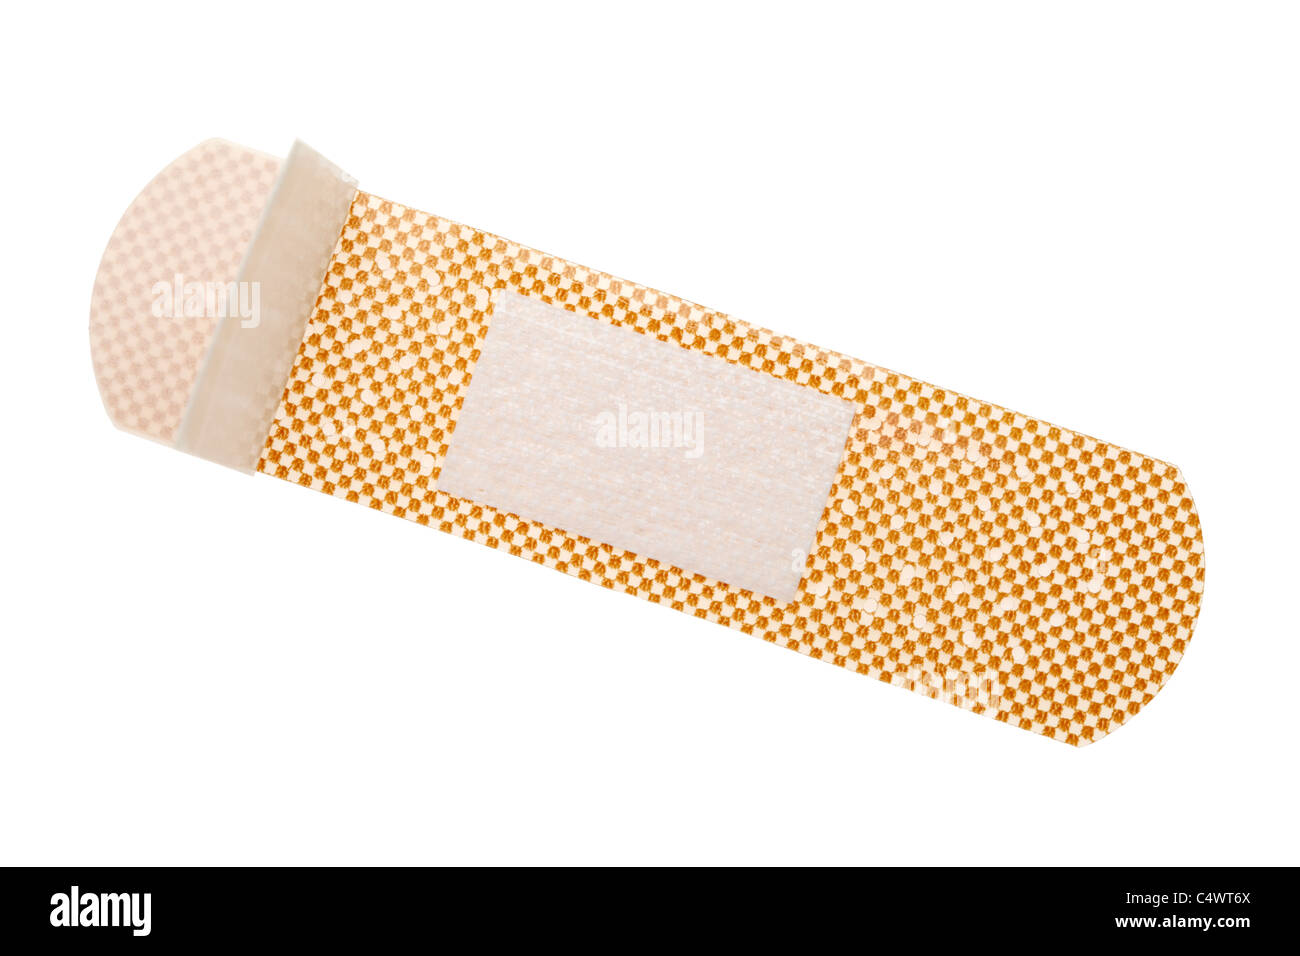 Band aid isolated on white background Stock Photo